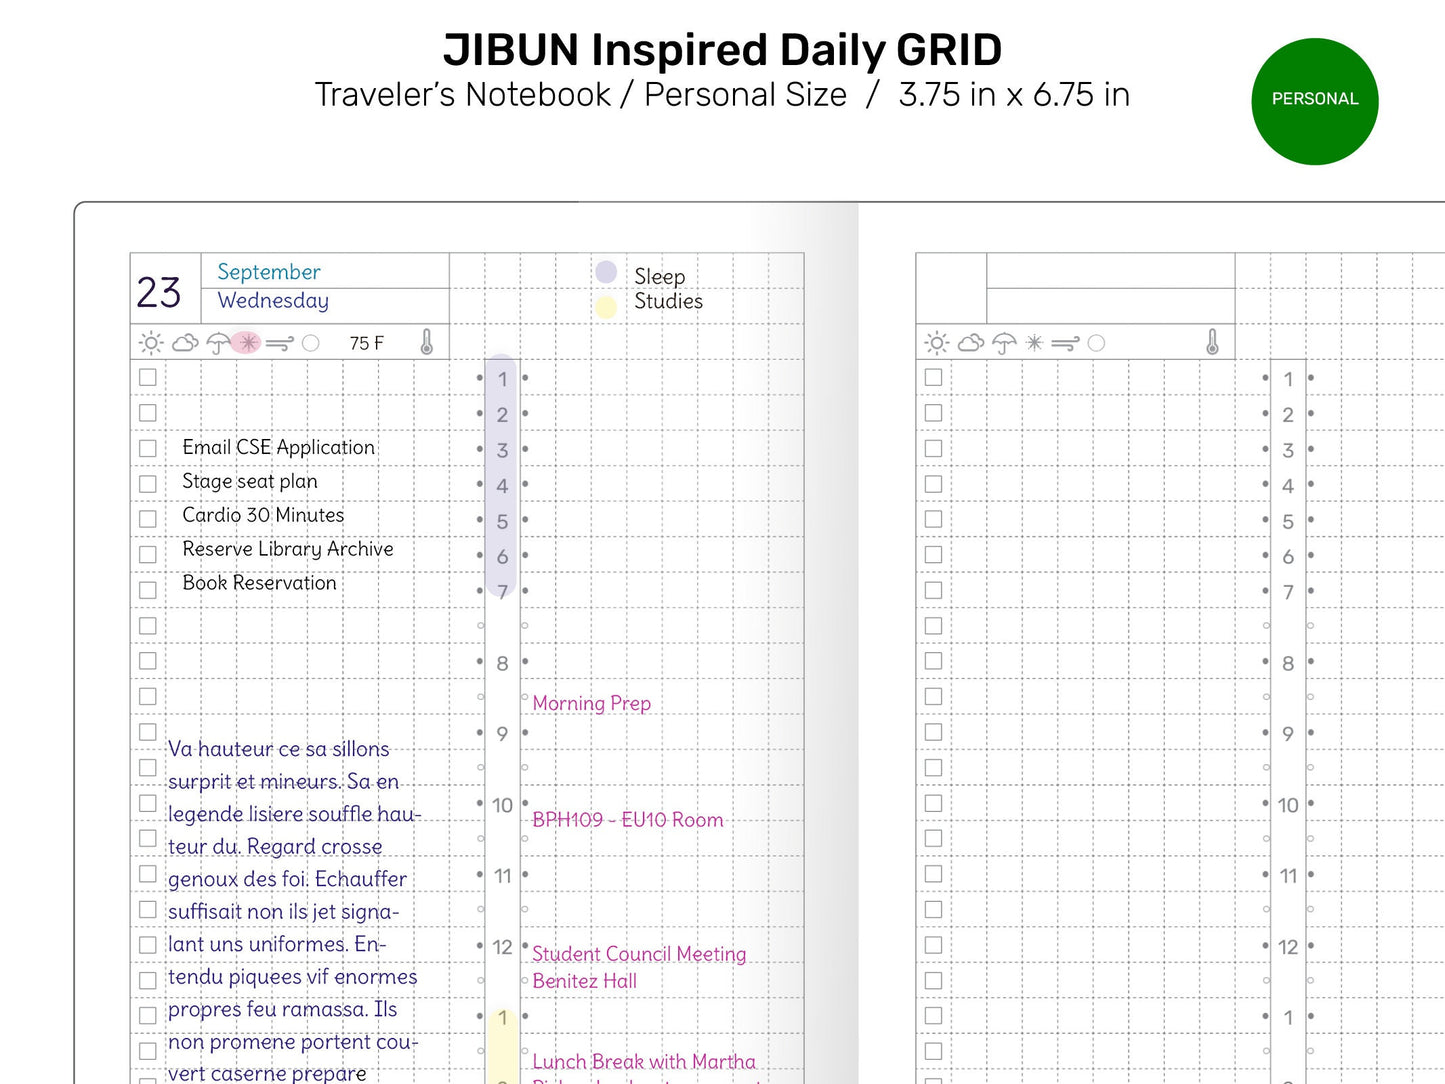 TN Personal JIBUN-Inspired Daily GRID Printable Insert Refill Traveler's Notebook PER22-005